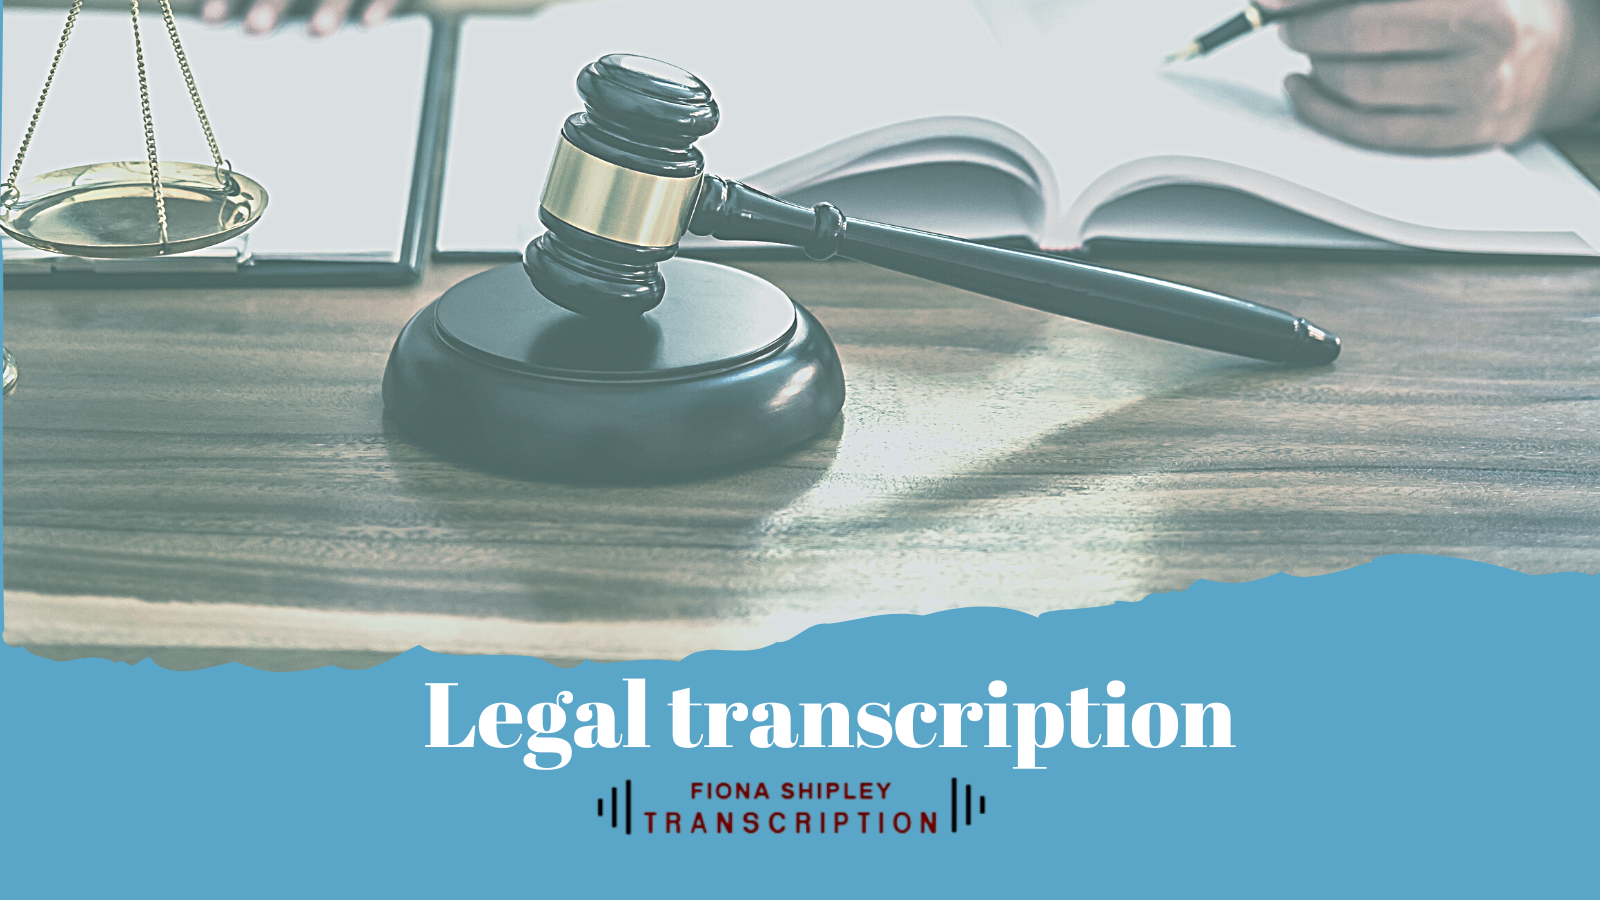 Legal transcription